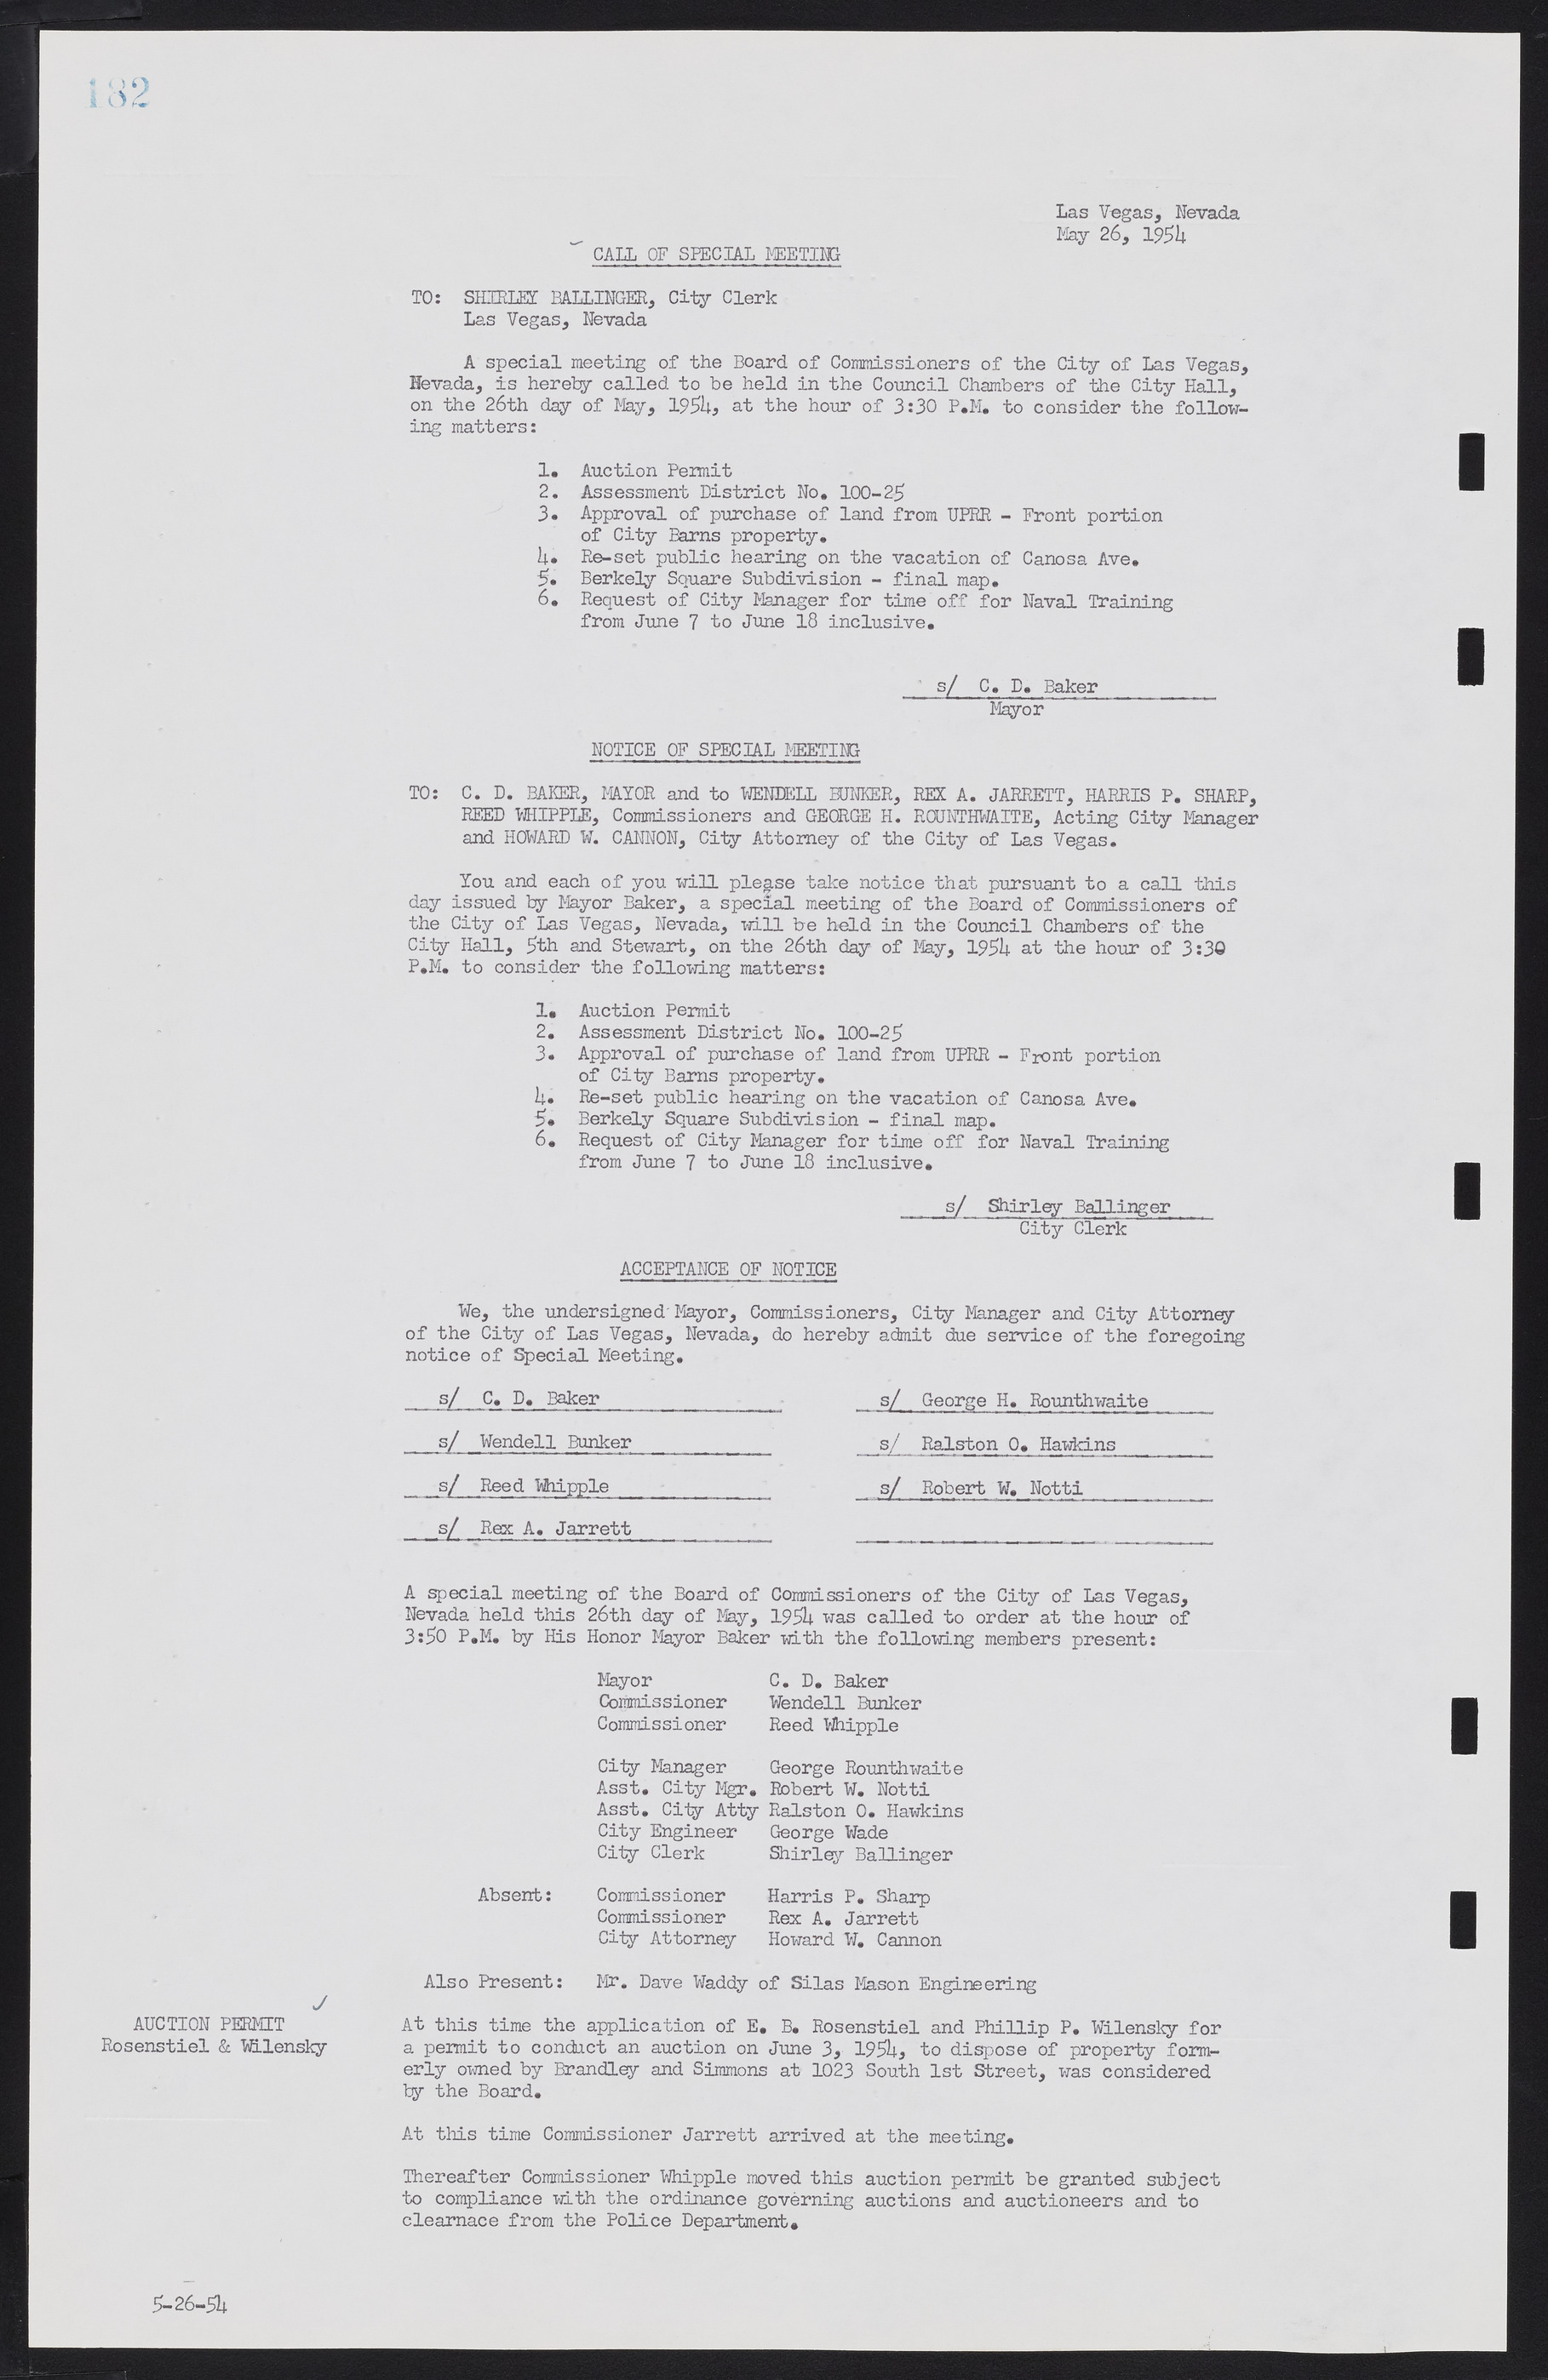 Las Vegas City Commission Minutes, February 17, 1954 to September 21, 1955, lvc000009-188